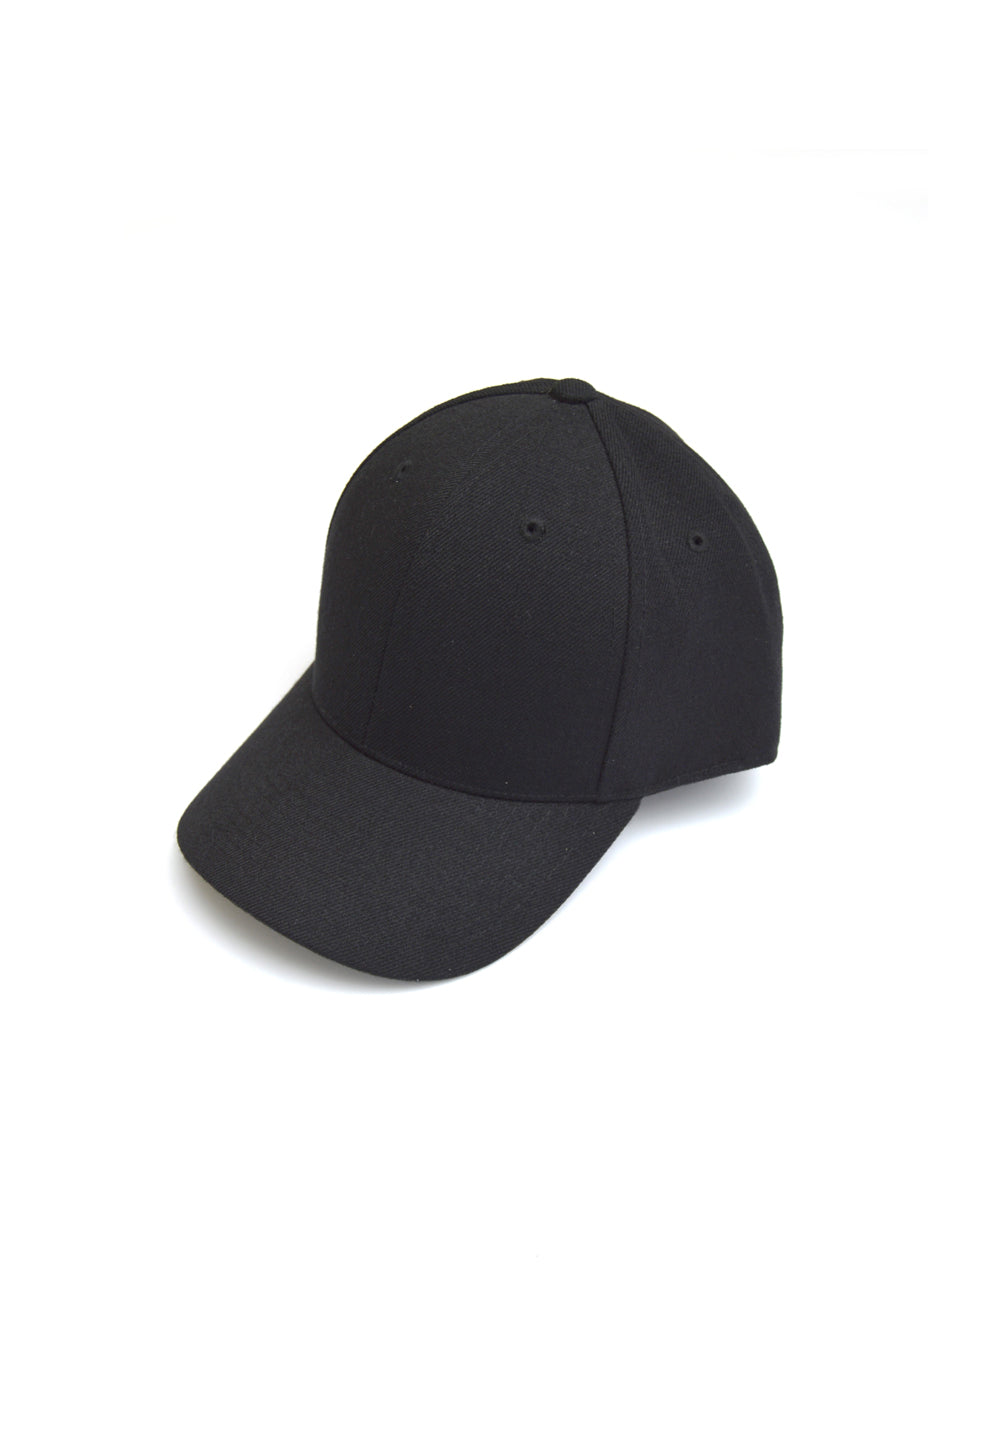 baseball cap - black - size 7 1/4